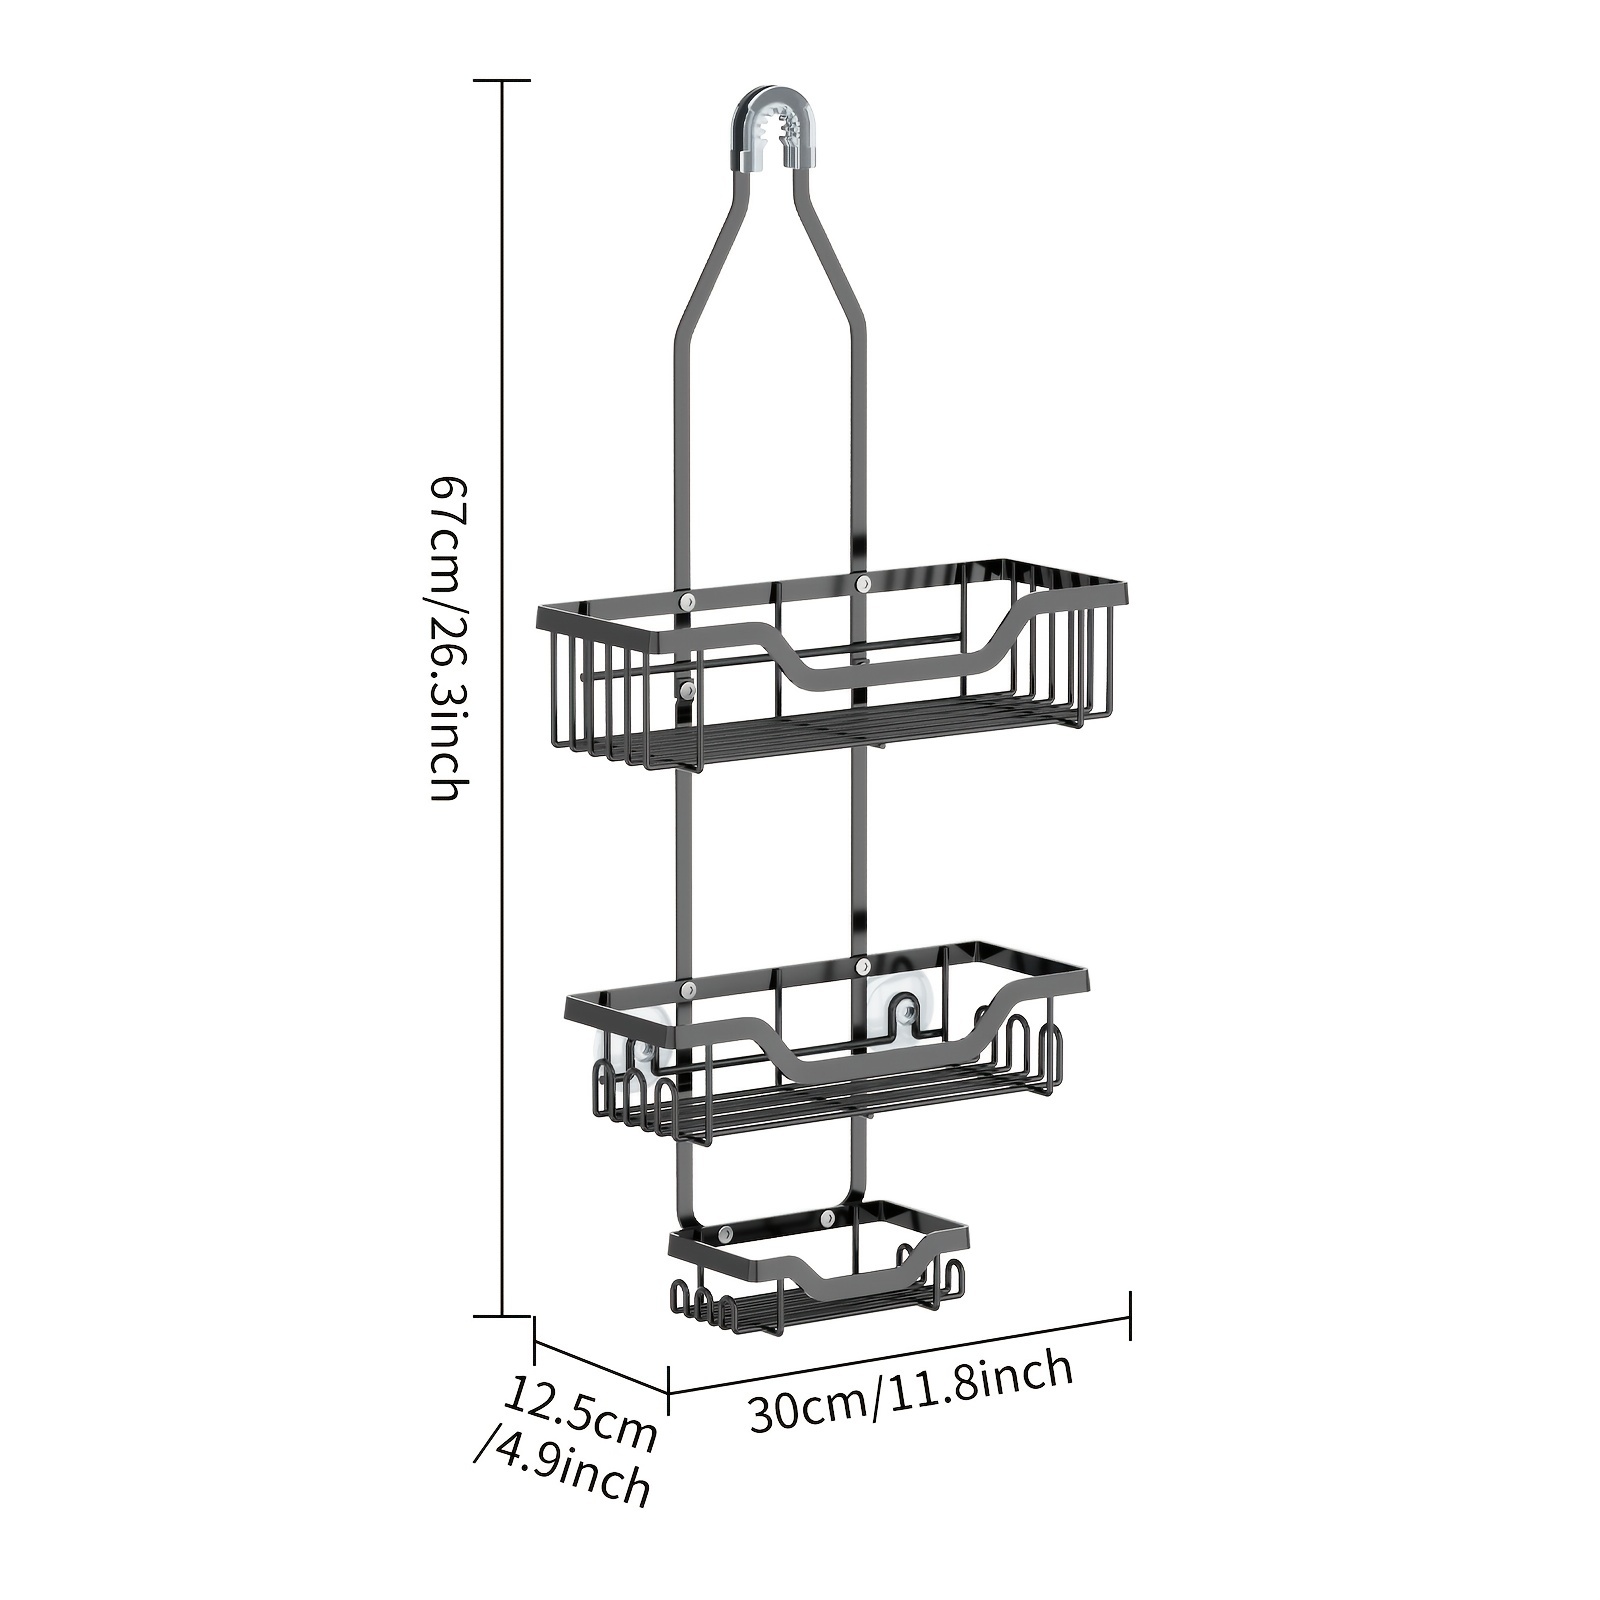 1pc Shower Caddy Basket Shelf with Hooks for Hanging Sponge, Wall